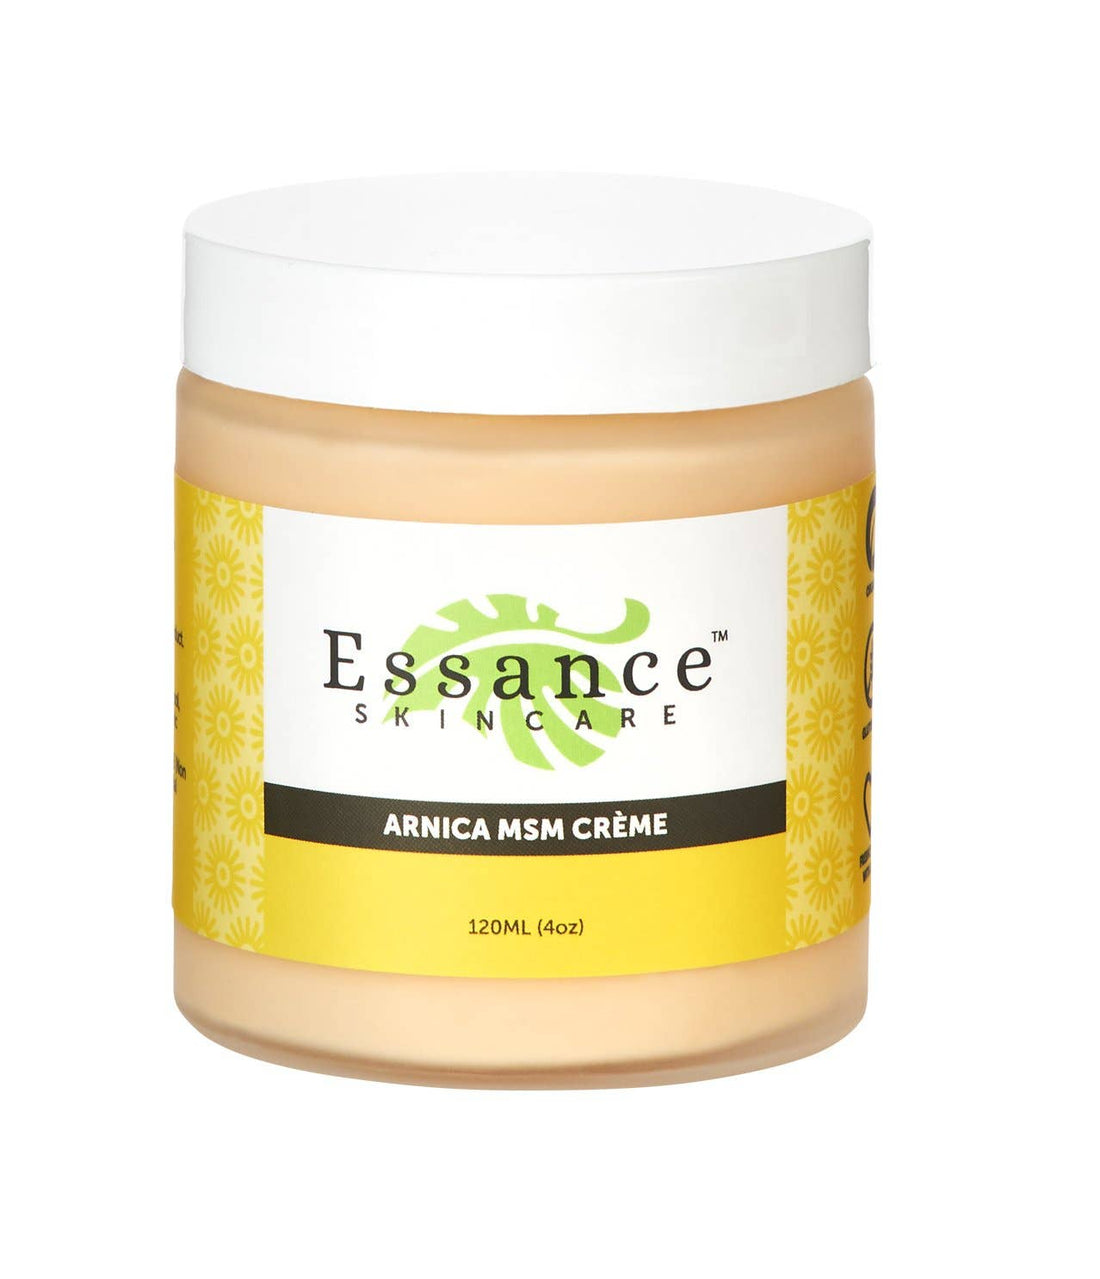 Essance Skincare - Arnica MSM Creme